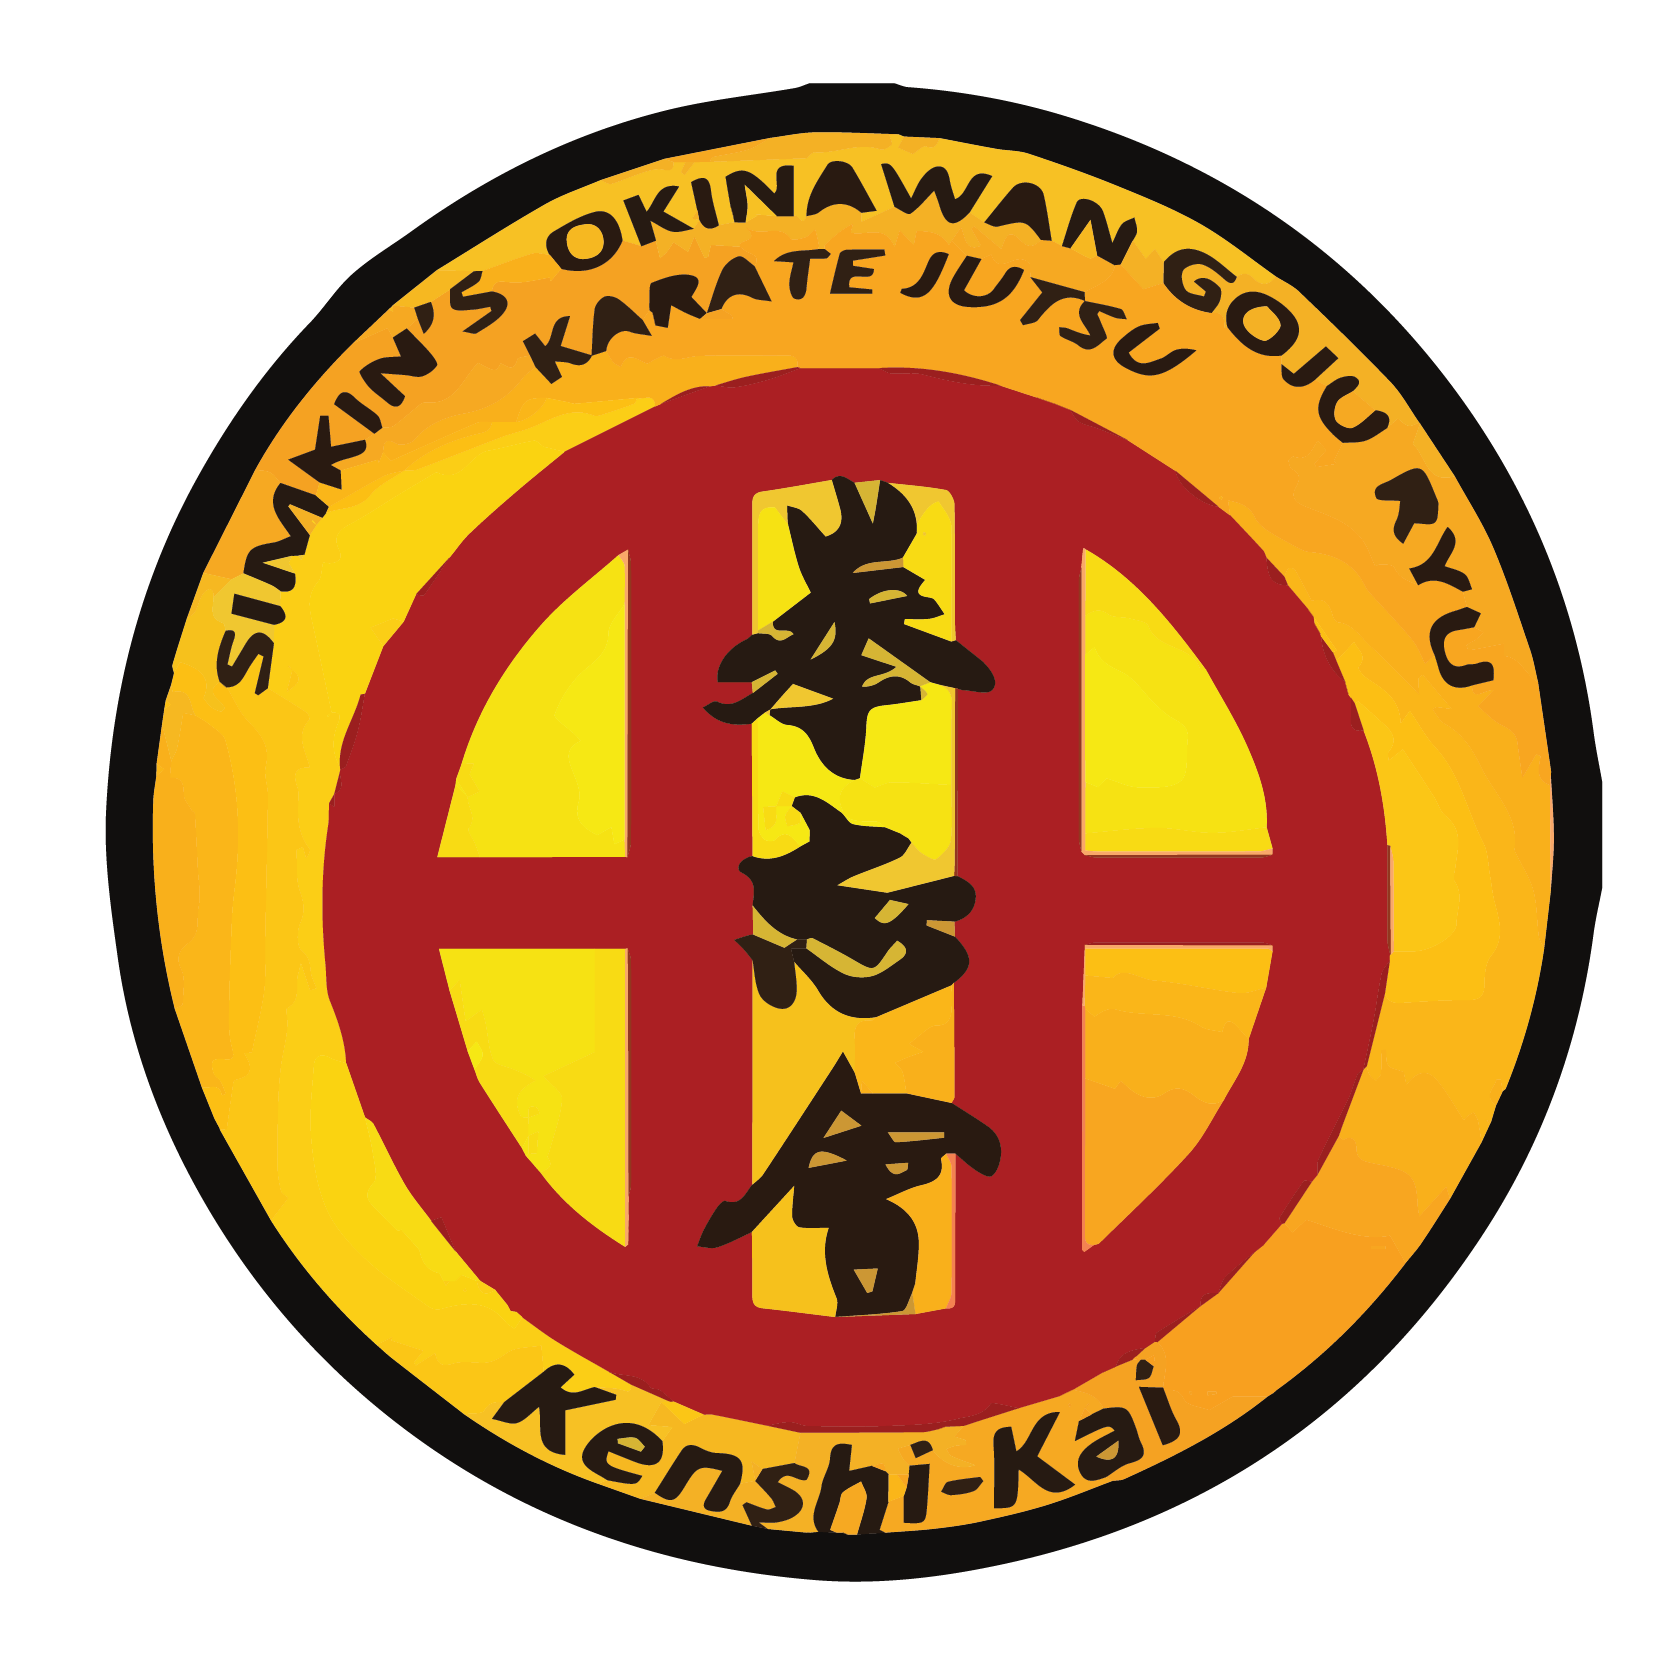 a logo for simkins okinawan goju ryu kenshi-kai